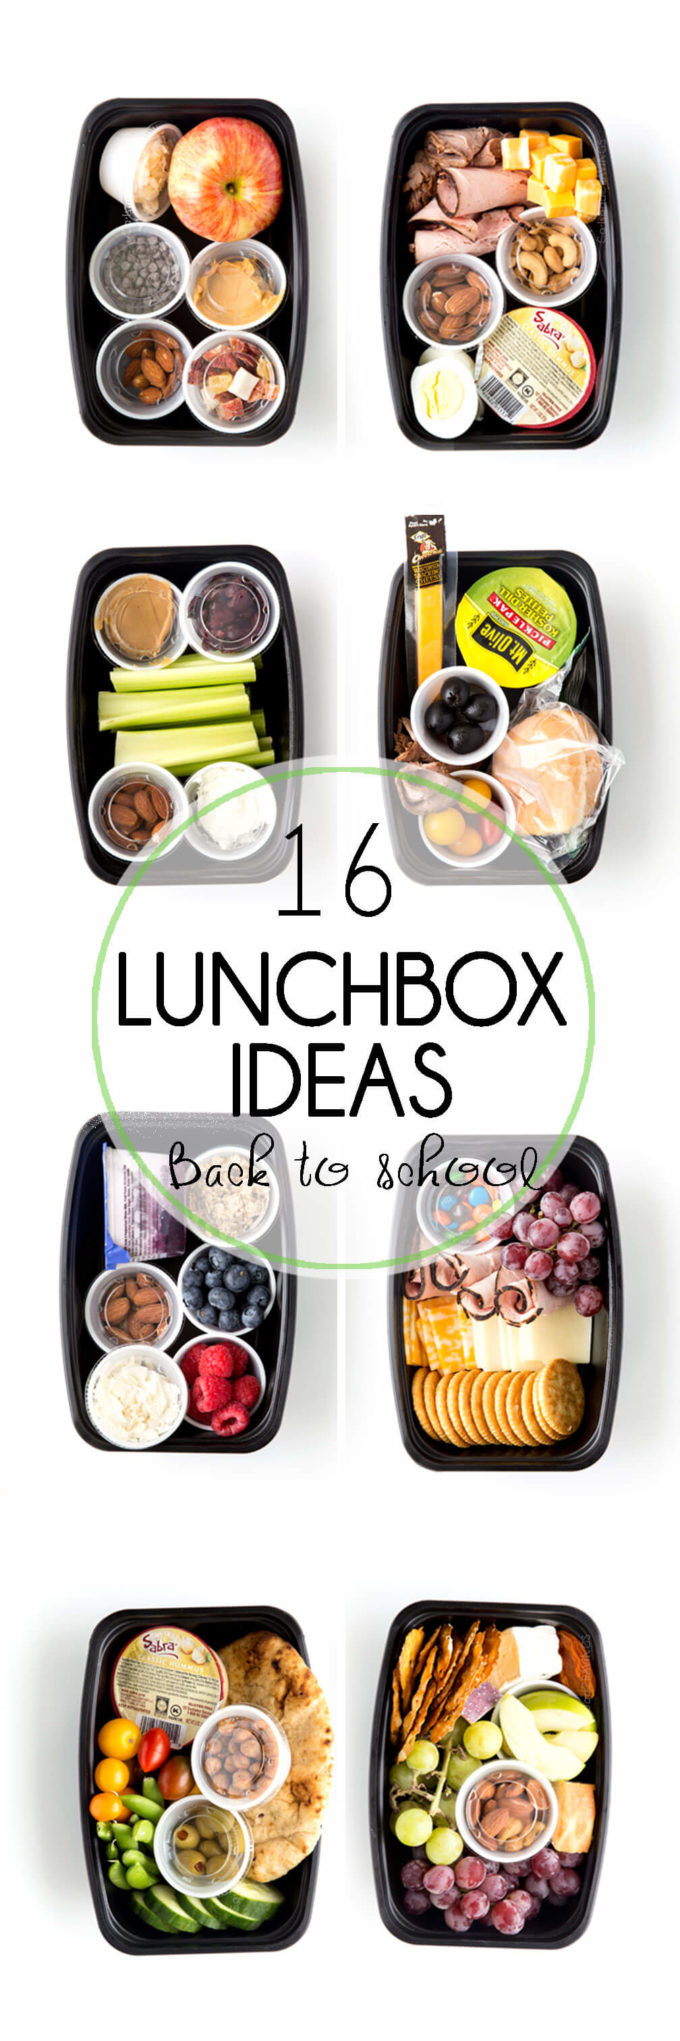 https://www.eazypeazymealz.com/wp-content/uploads/2017/07/Lunchbox-ideas-for-back-to-school.jpg